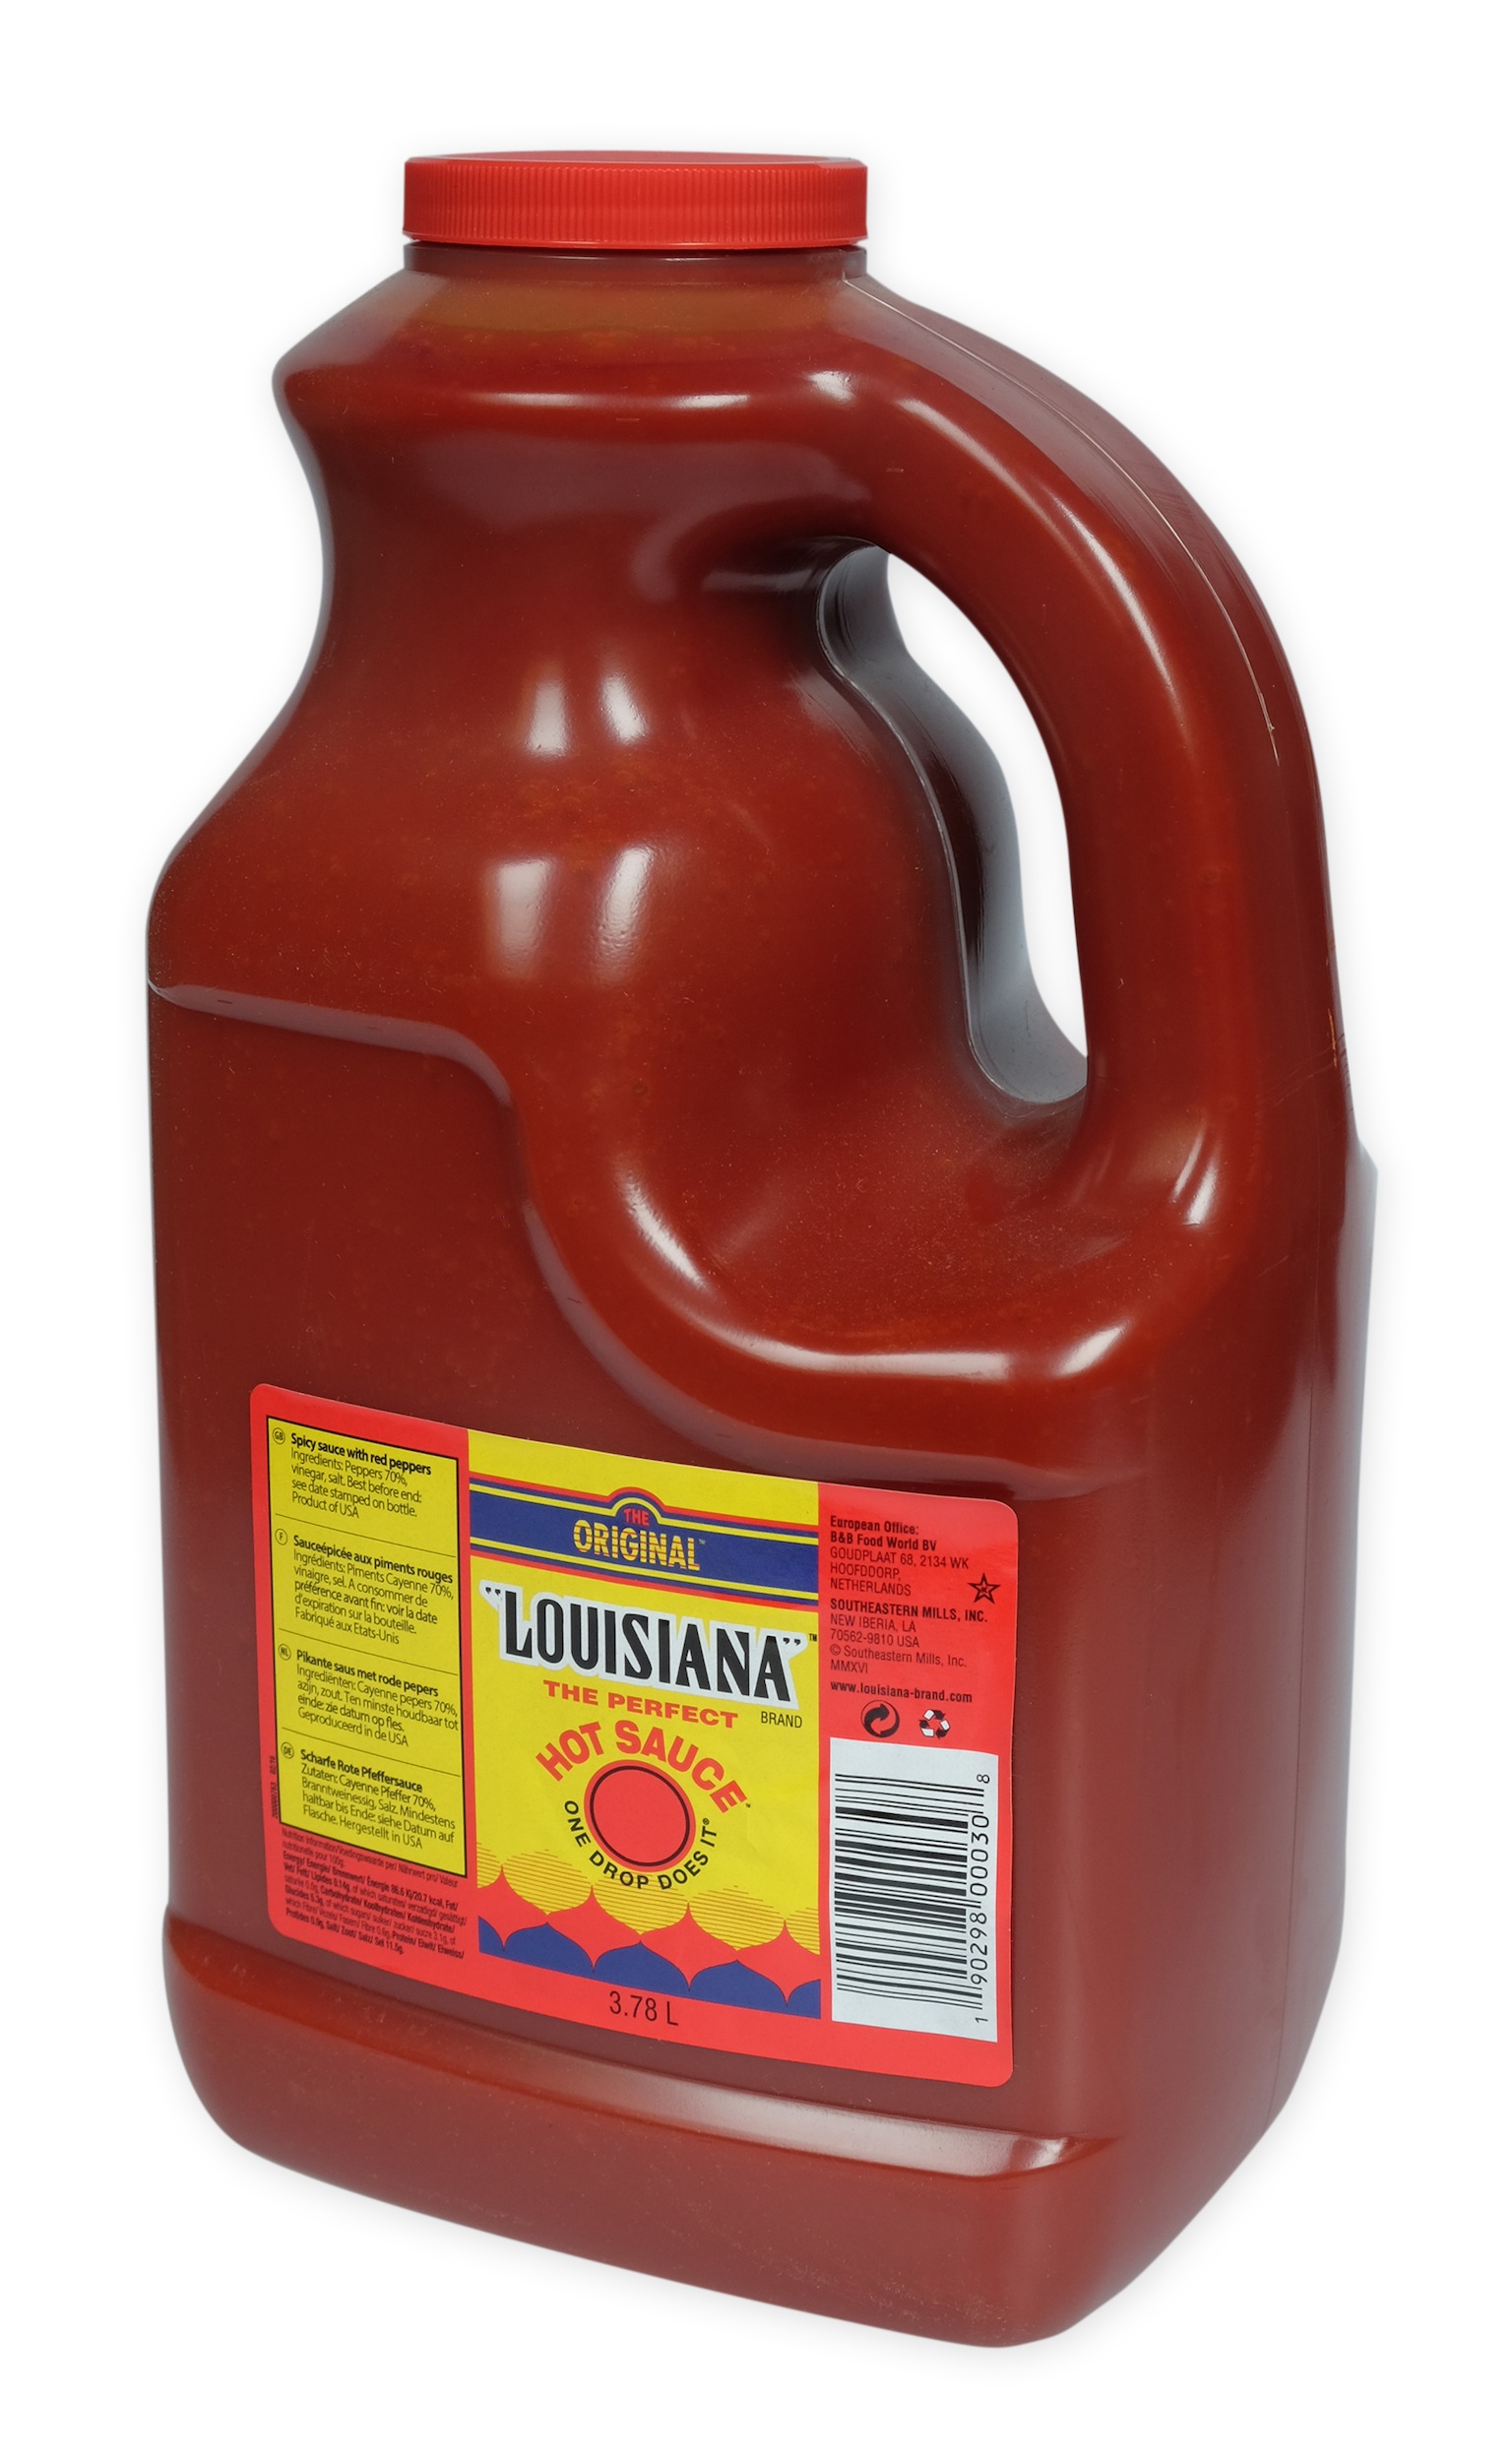 Louisiana HOT sauce